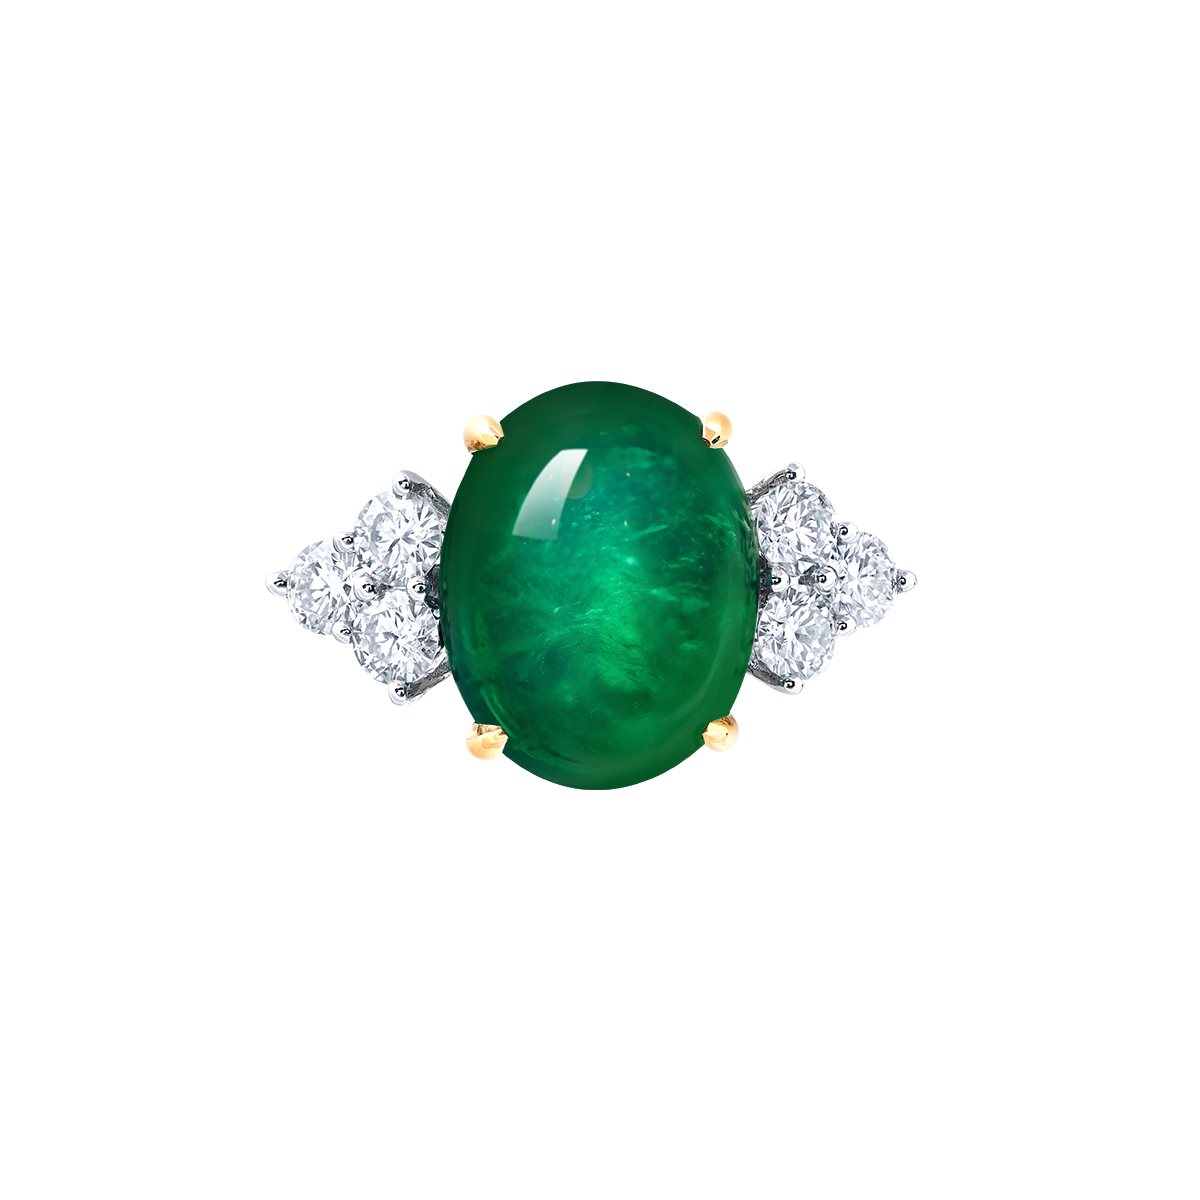 8.00克拉 哥倫比亞天然MUZO GREEN祖母綠鑽戒
Colombian MUZO Green Emerald 
and Diamond Ring